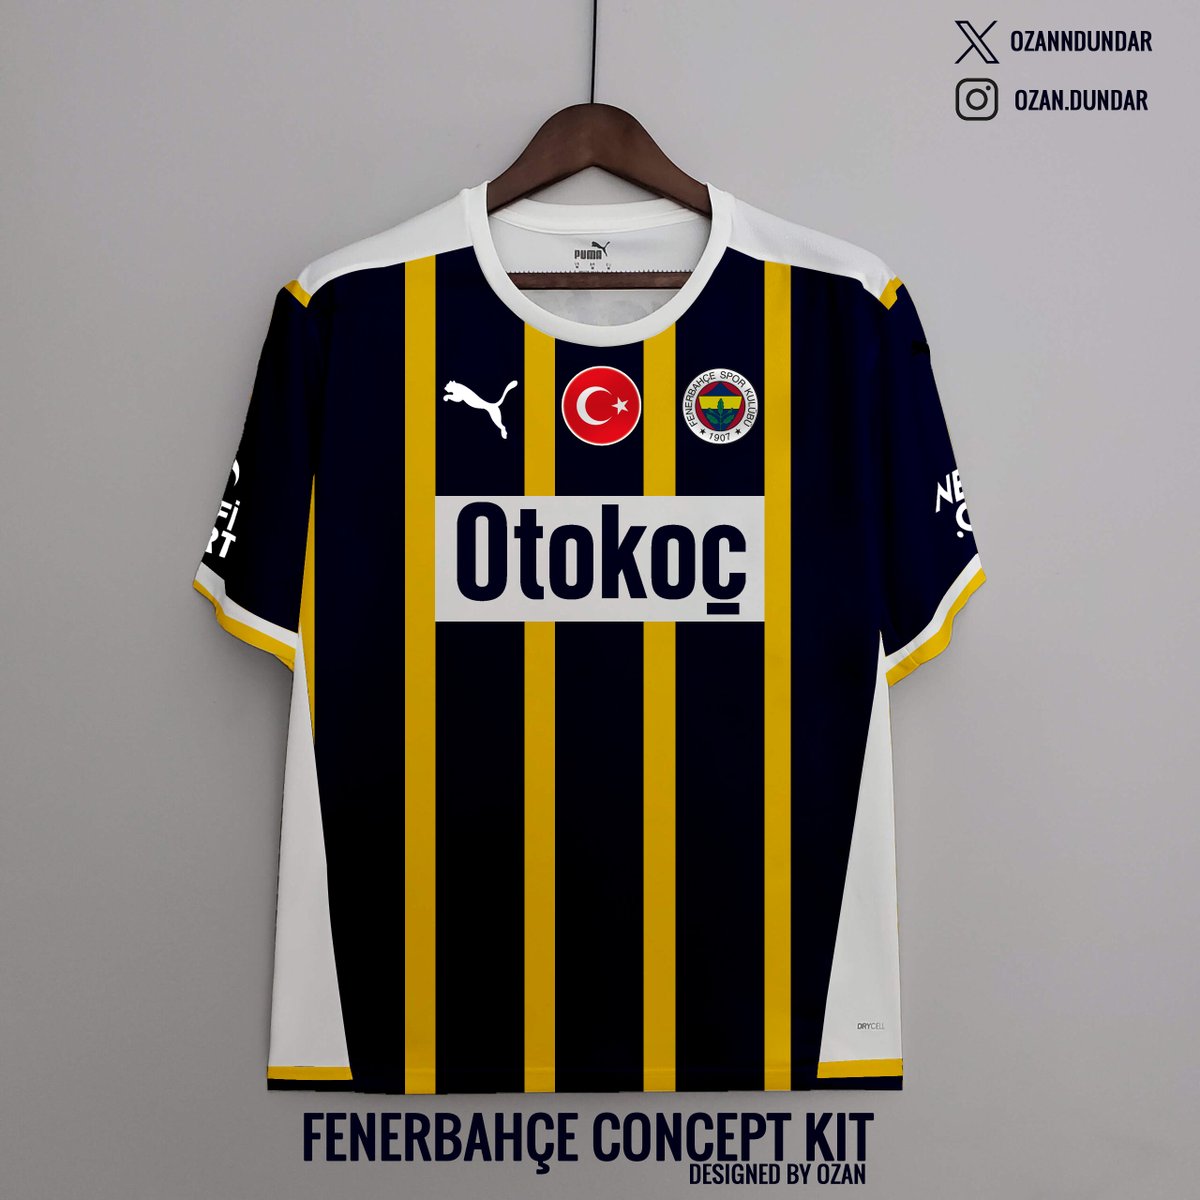 Fenerbahçe x Puma Çubuklu Nostalgia Concept Kit Design. 
#fenerbahçe #forma #conceptkit #süperlig